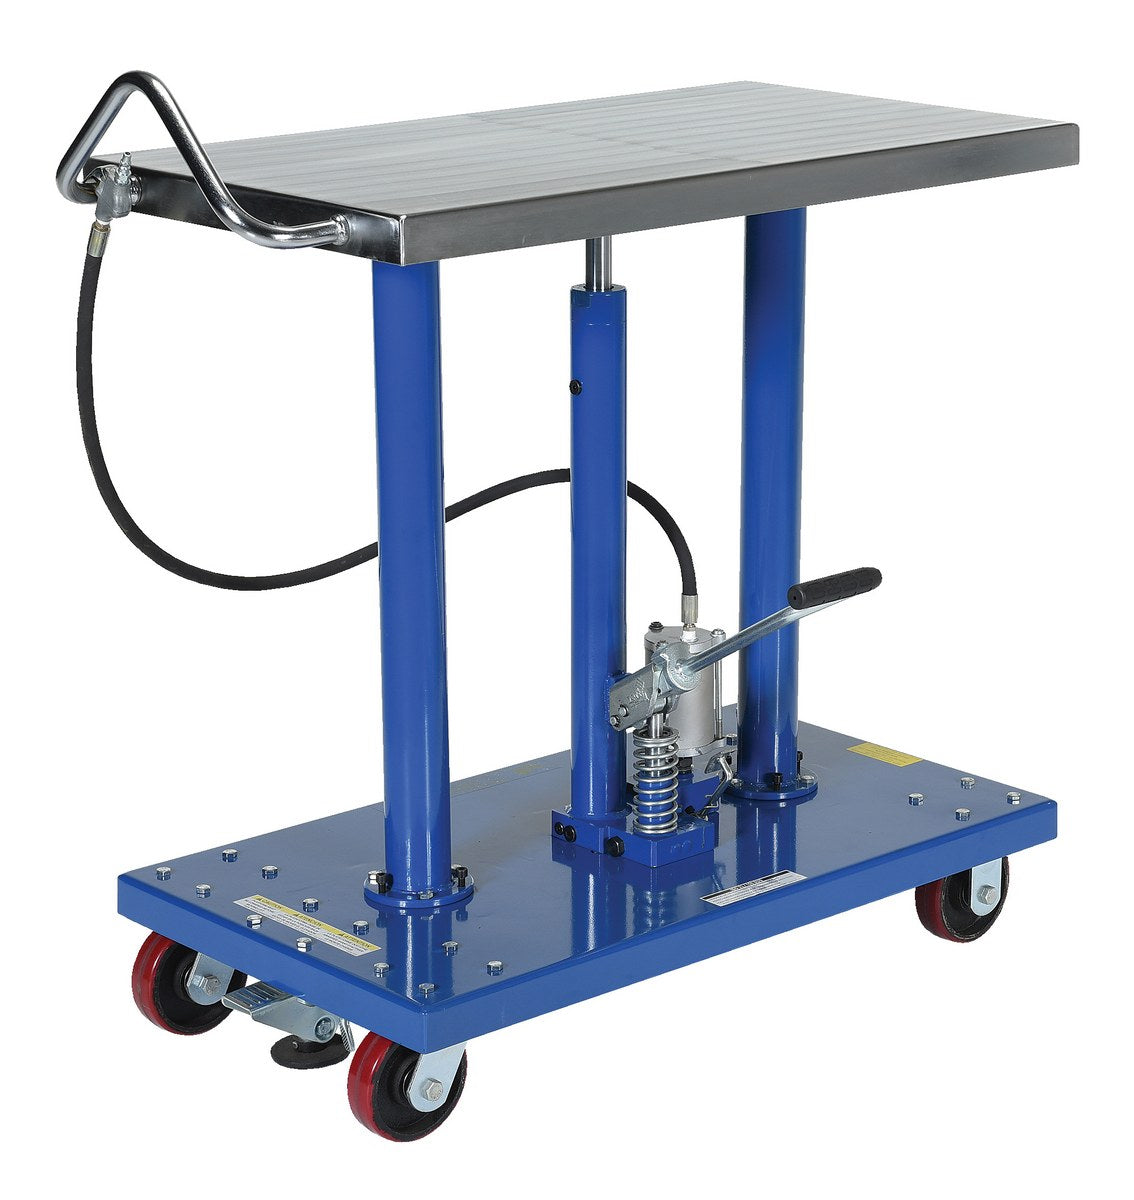 Hydraulic Air Post Table 2K LB 24 x 36